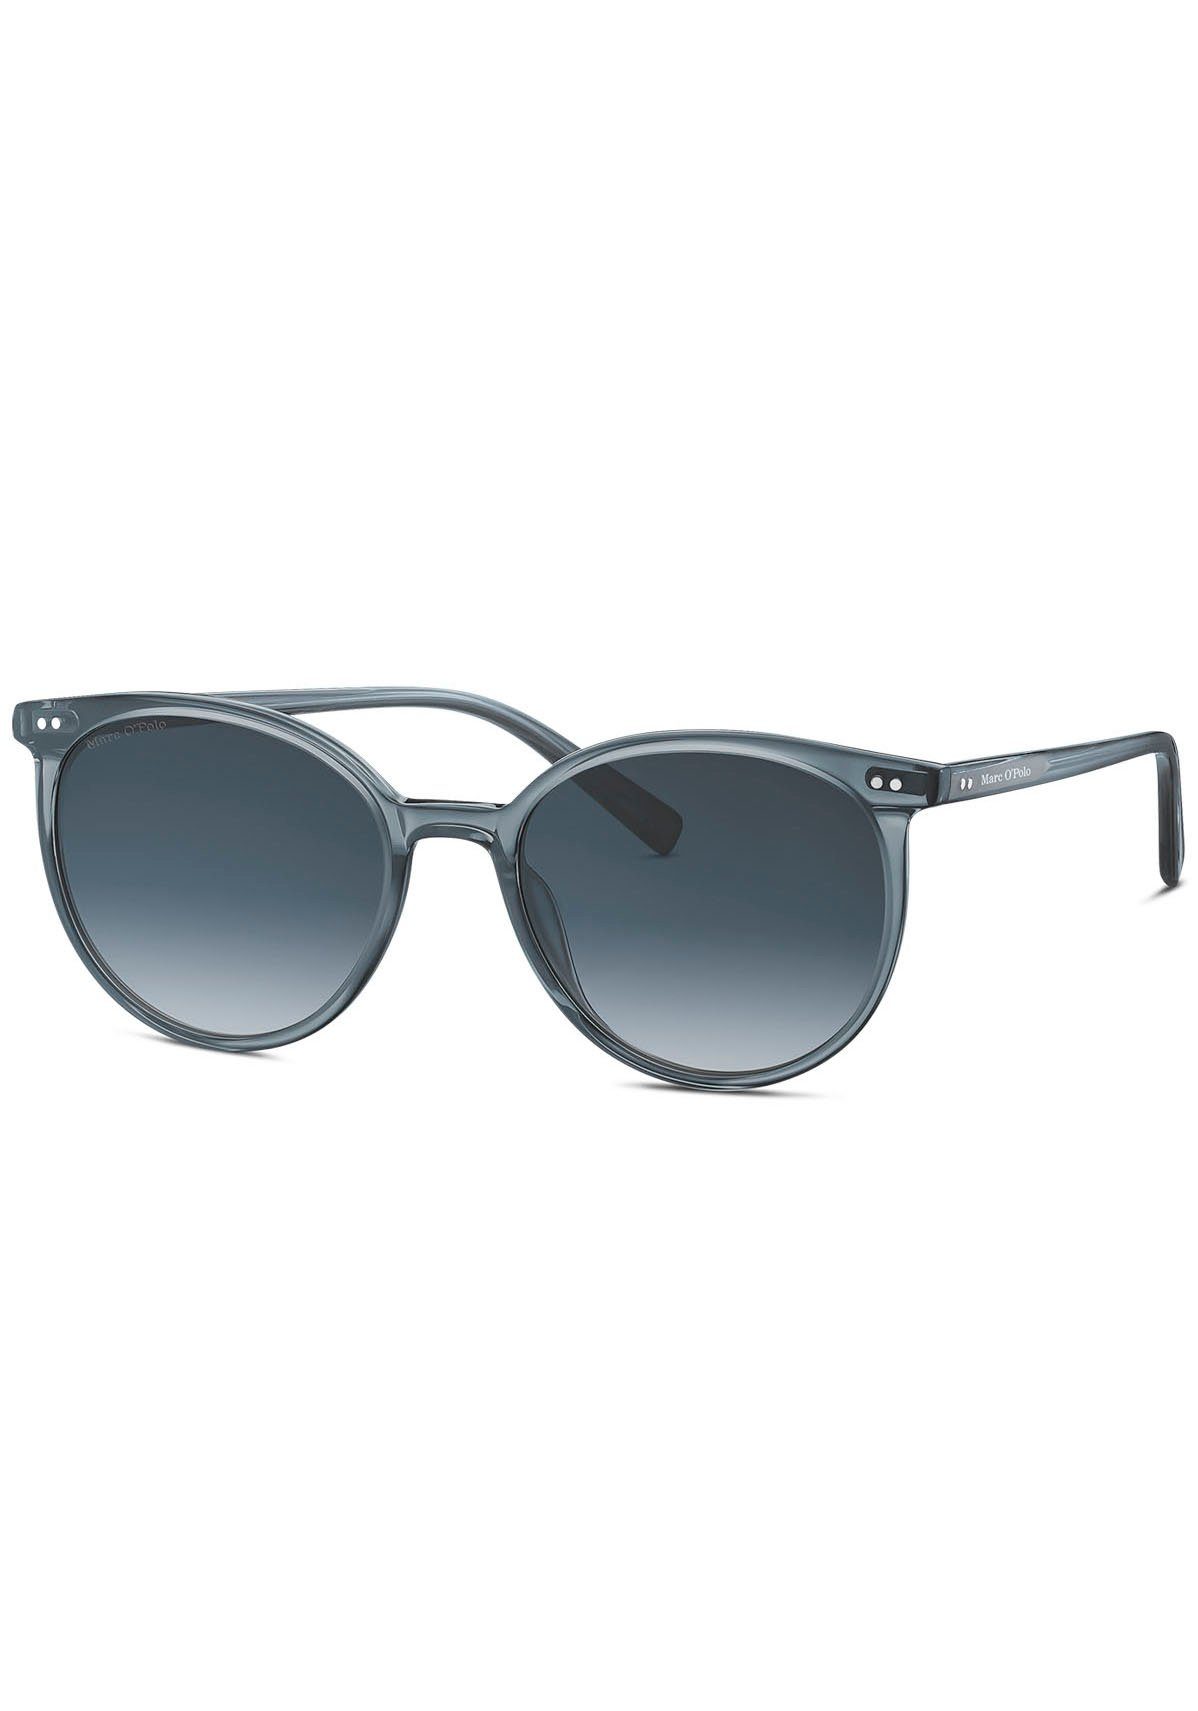 Dieses Jahr ist auch ein heißes Thema Marc O'Polo Sonnenbrille Modell 506164 Panto-Form grau